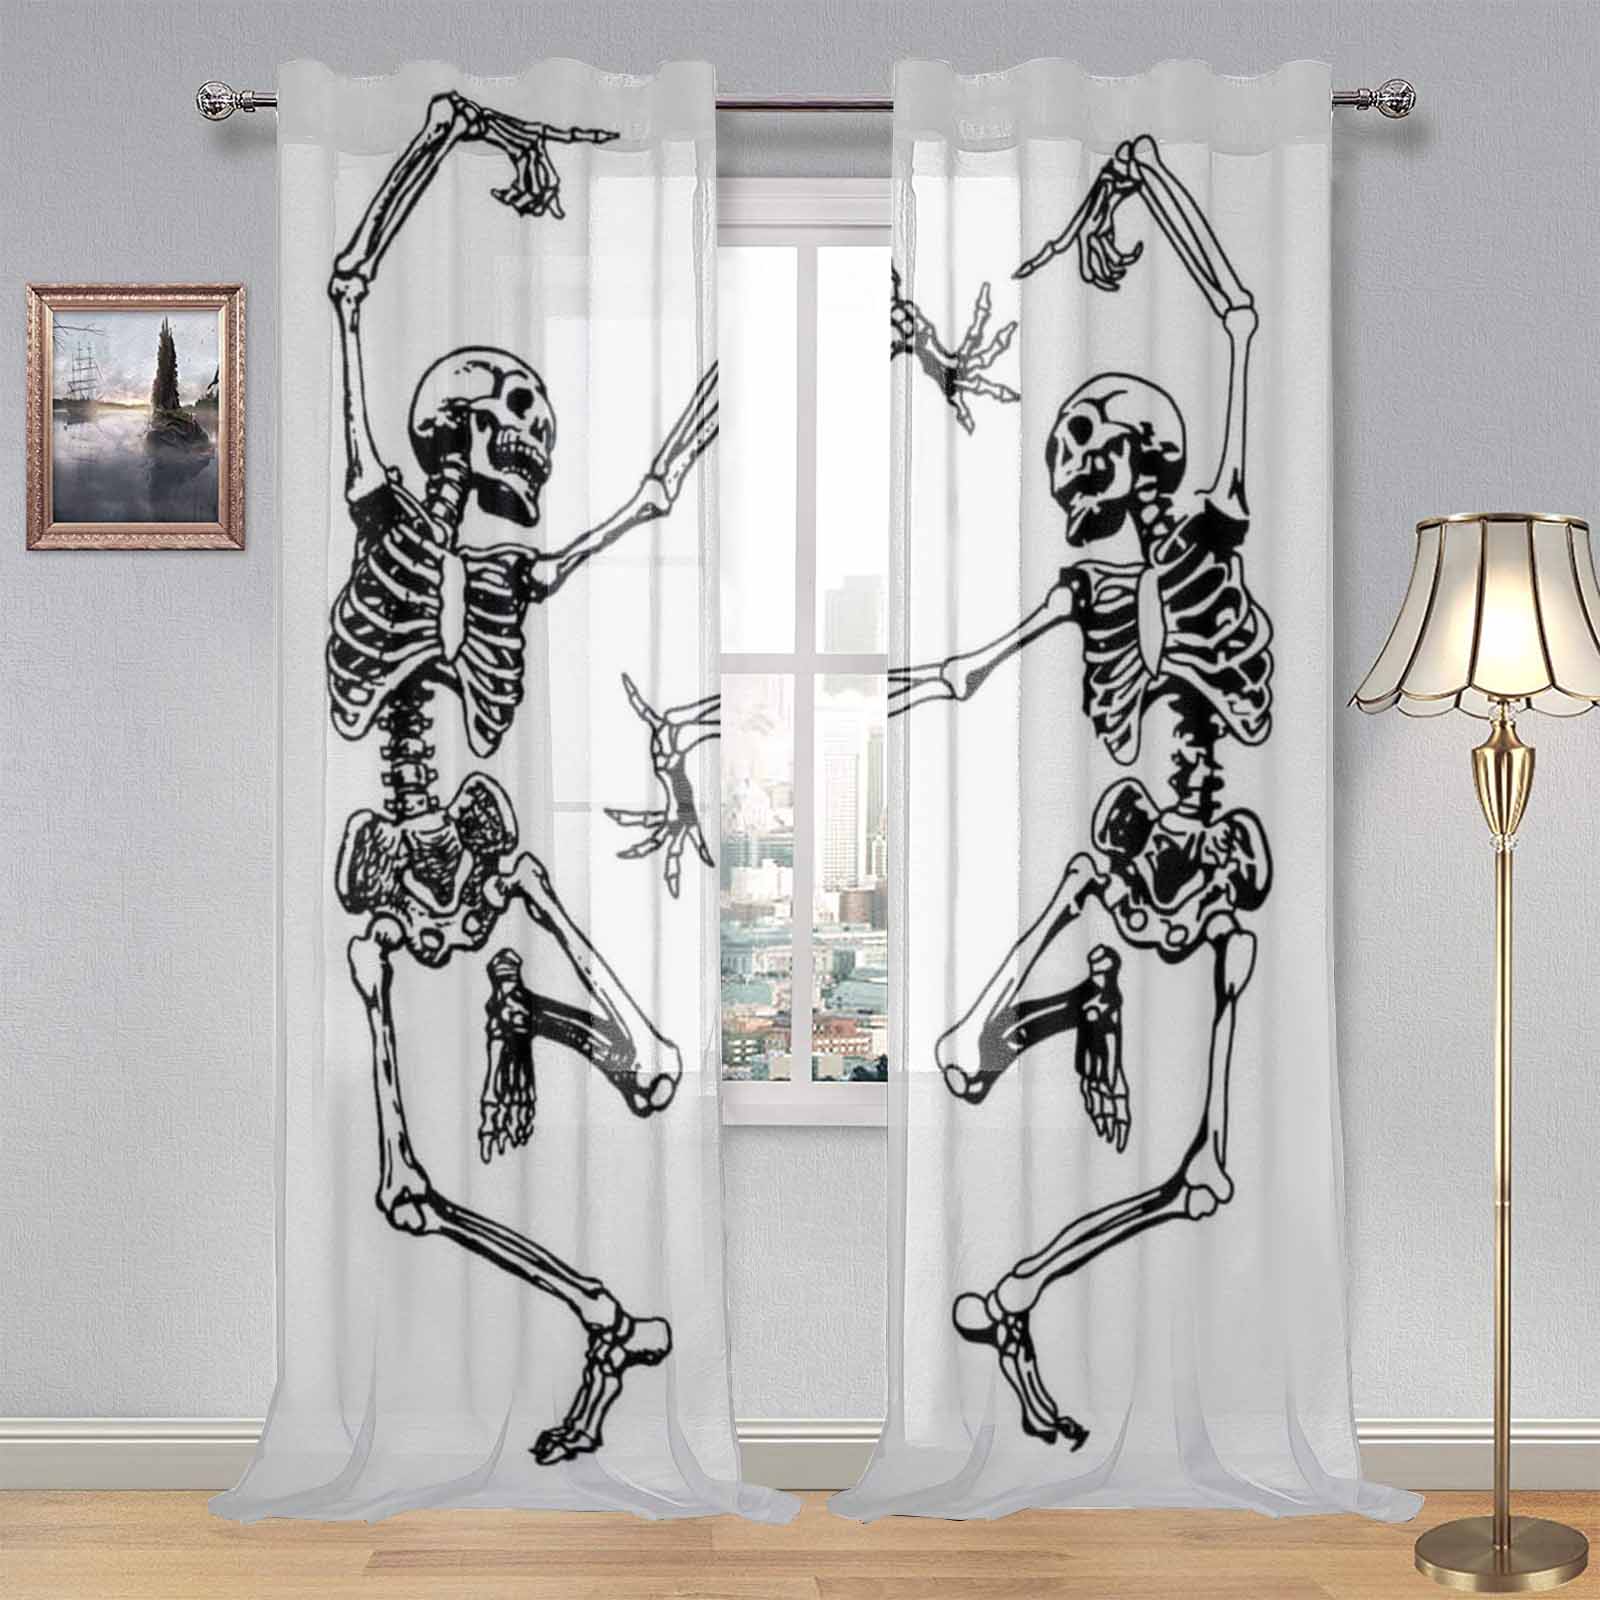 Kate McEnroe New York Sheer 2 - Panel Window Curtains in Monochrome Dancing SkeletonsWindow CurtainsDG1170271DXH7858D